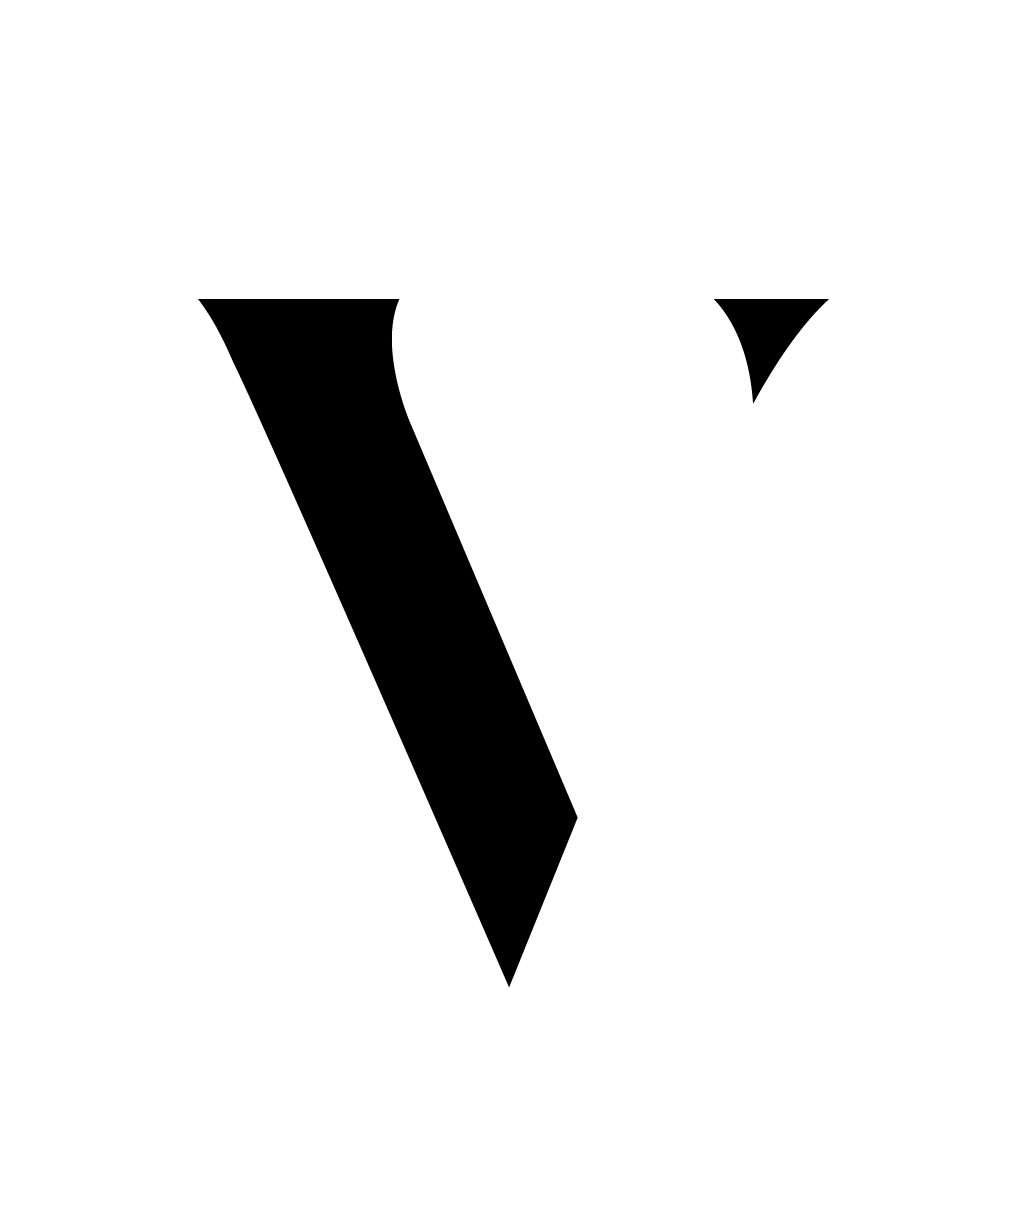 V. Логотип v. Эмблемы с буквами v. Пять на латинском. Буква v символ.